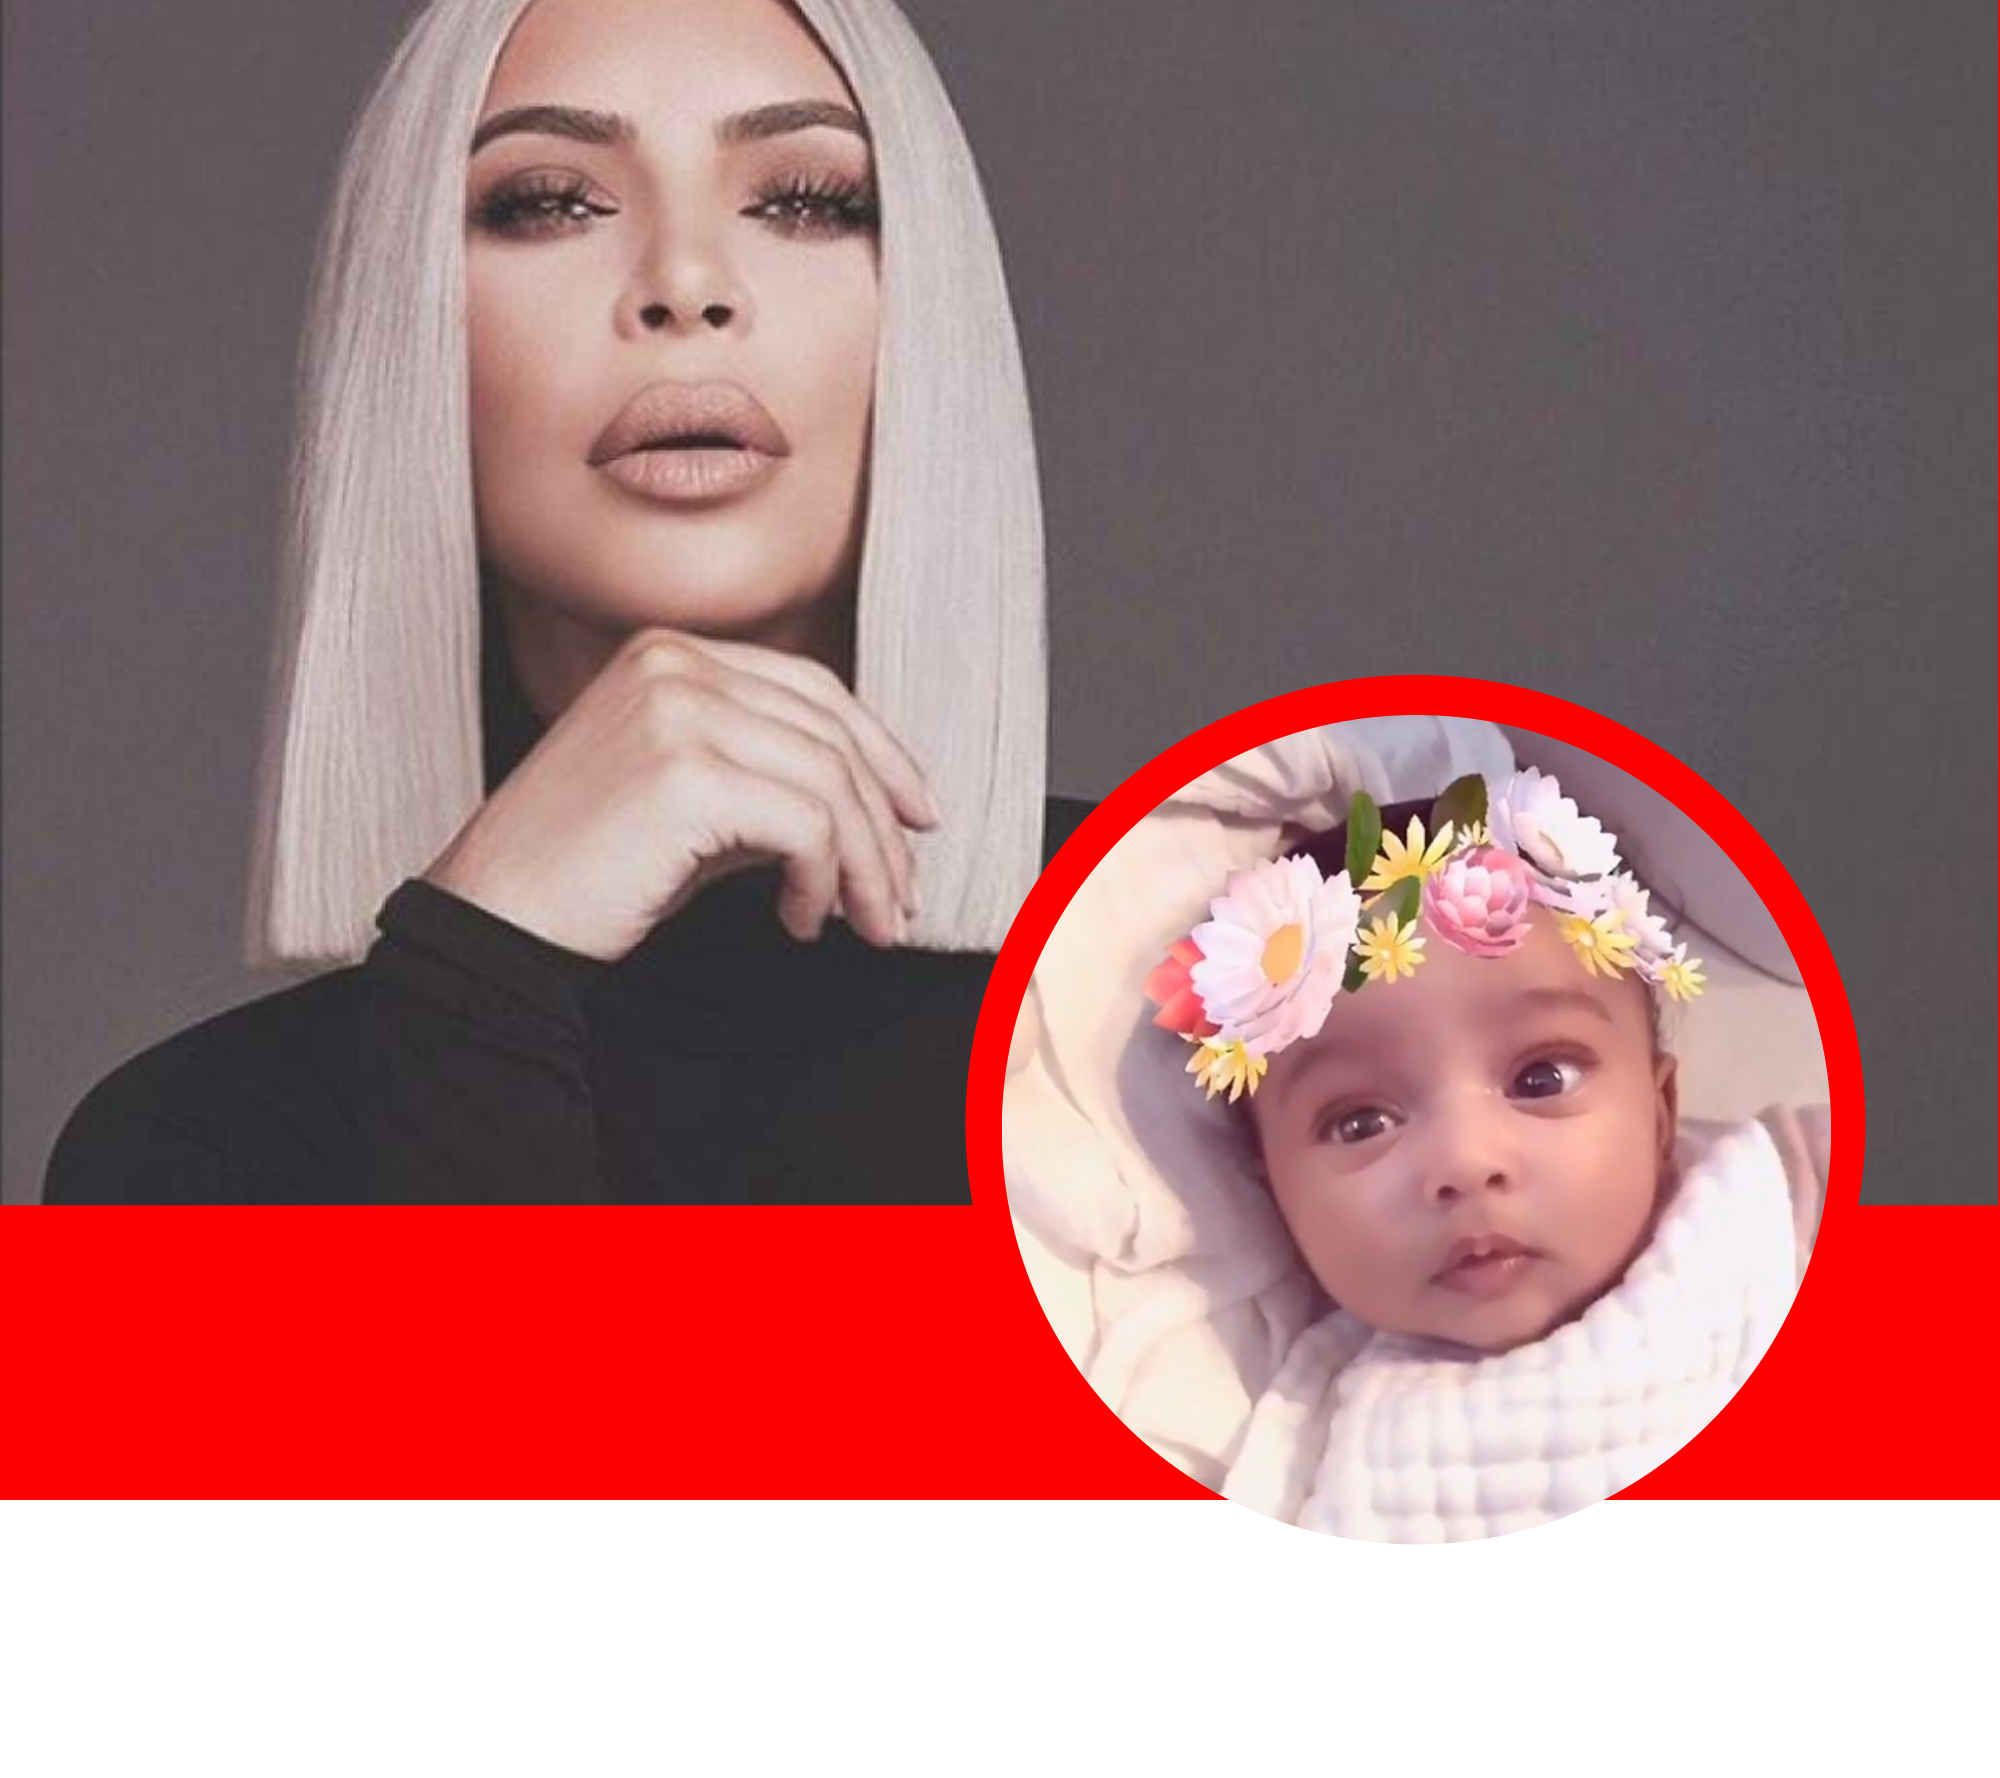 Al fin Kim Kardashian muestra una foto de su hija Chicago West sin retoques